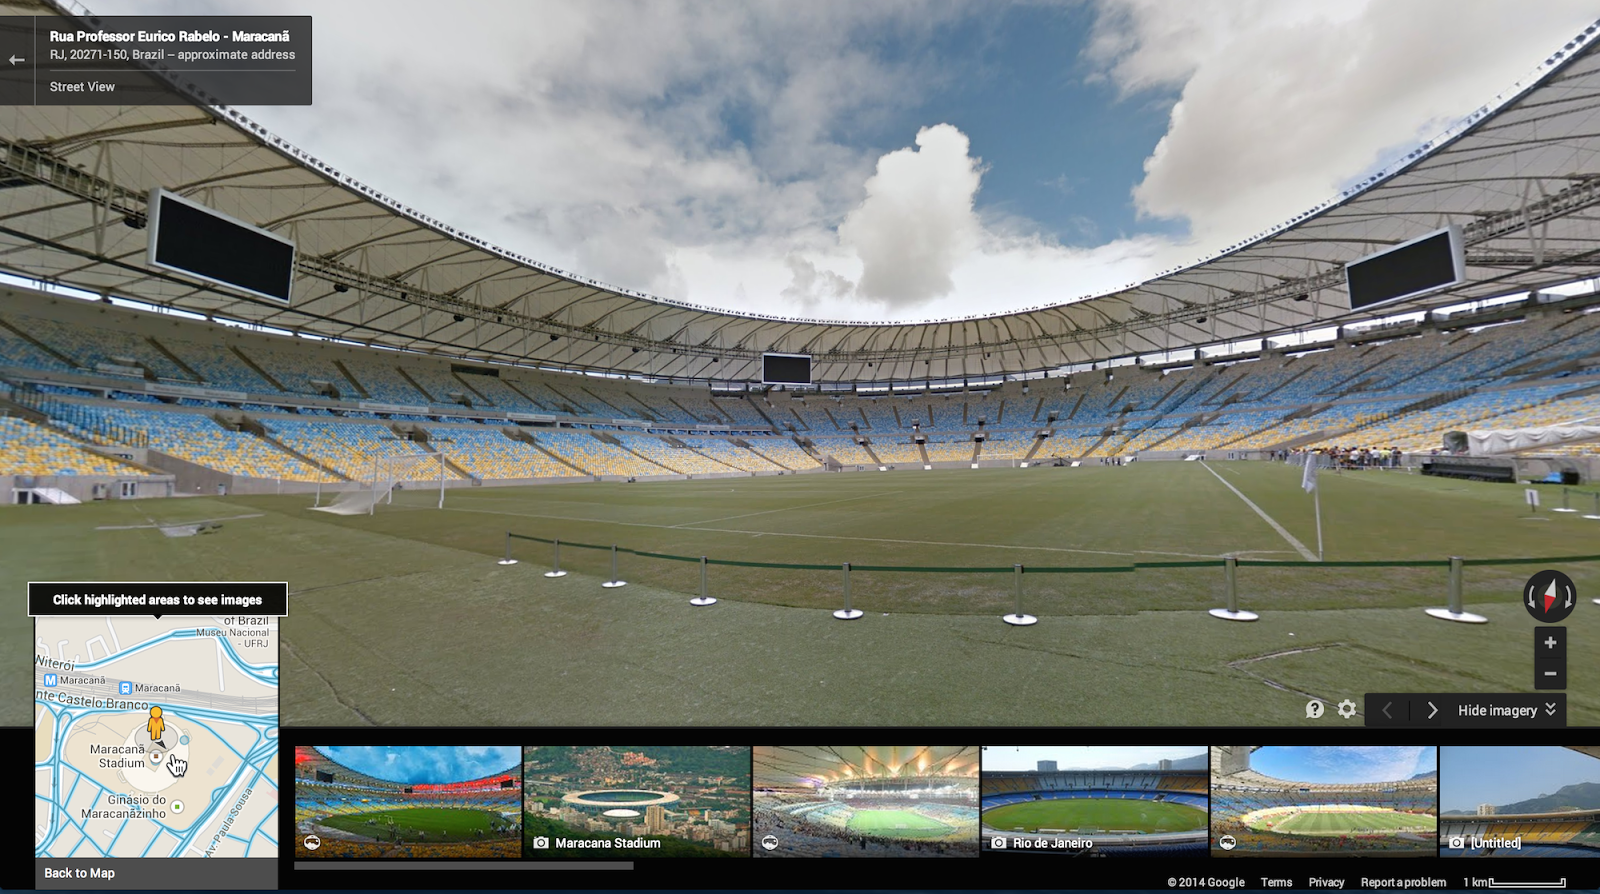 Google Maps view of World Cup stadiums - Maracana